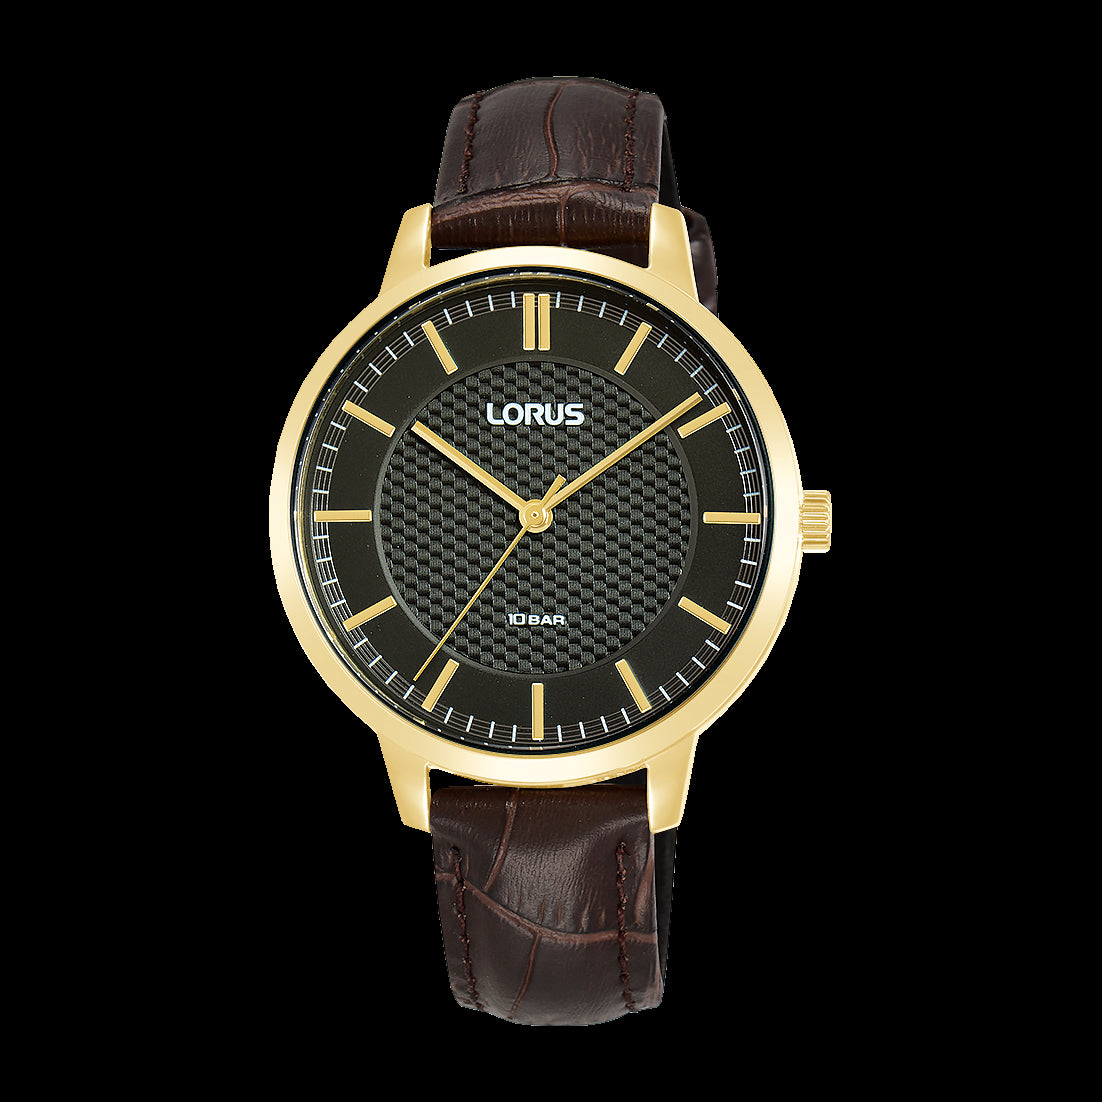 Lorus Ladies Dress Gold Coloured Watch